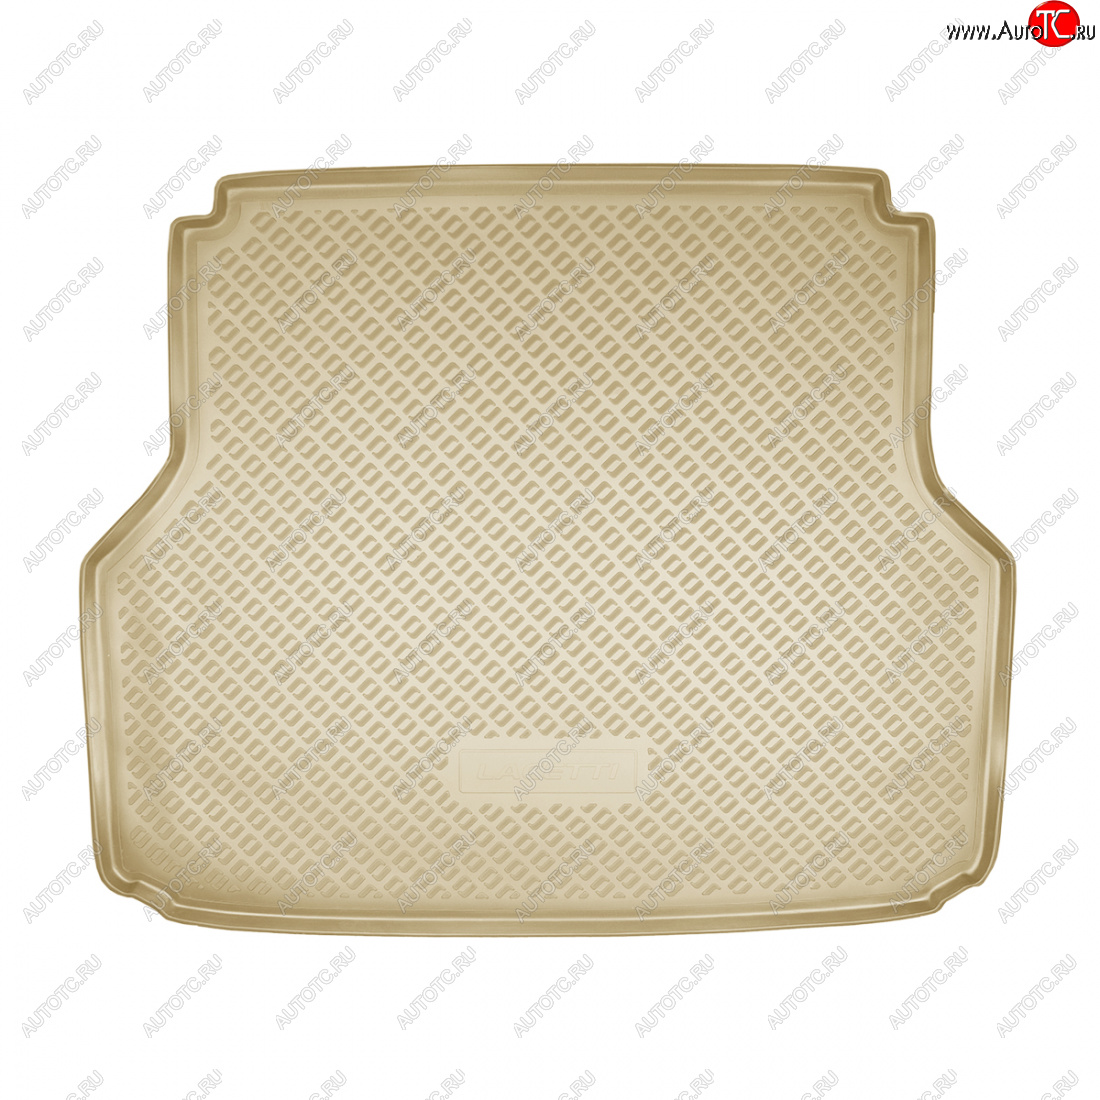 2 099 р. Коврик багажника Norplast Unidec  Chevrolet Lacetti  универсал (2002-2013) (Цвет: бежевый)